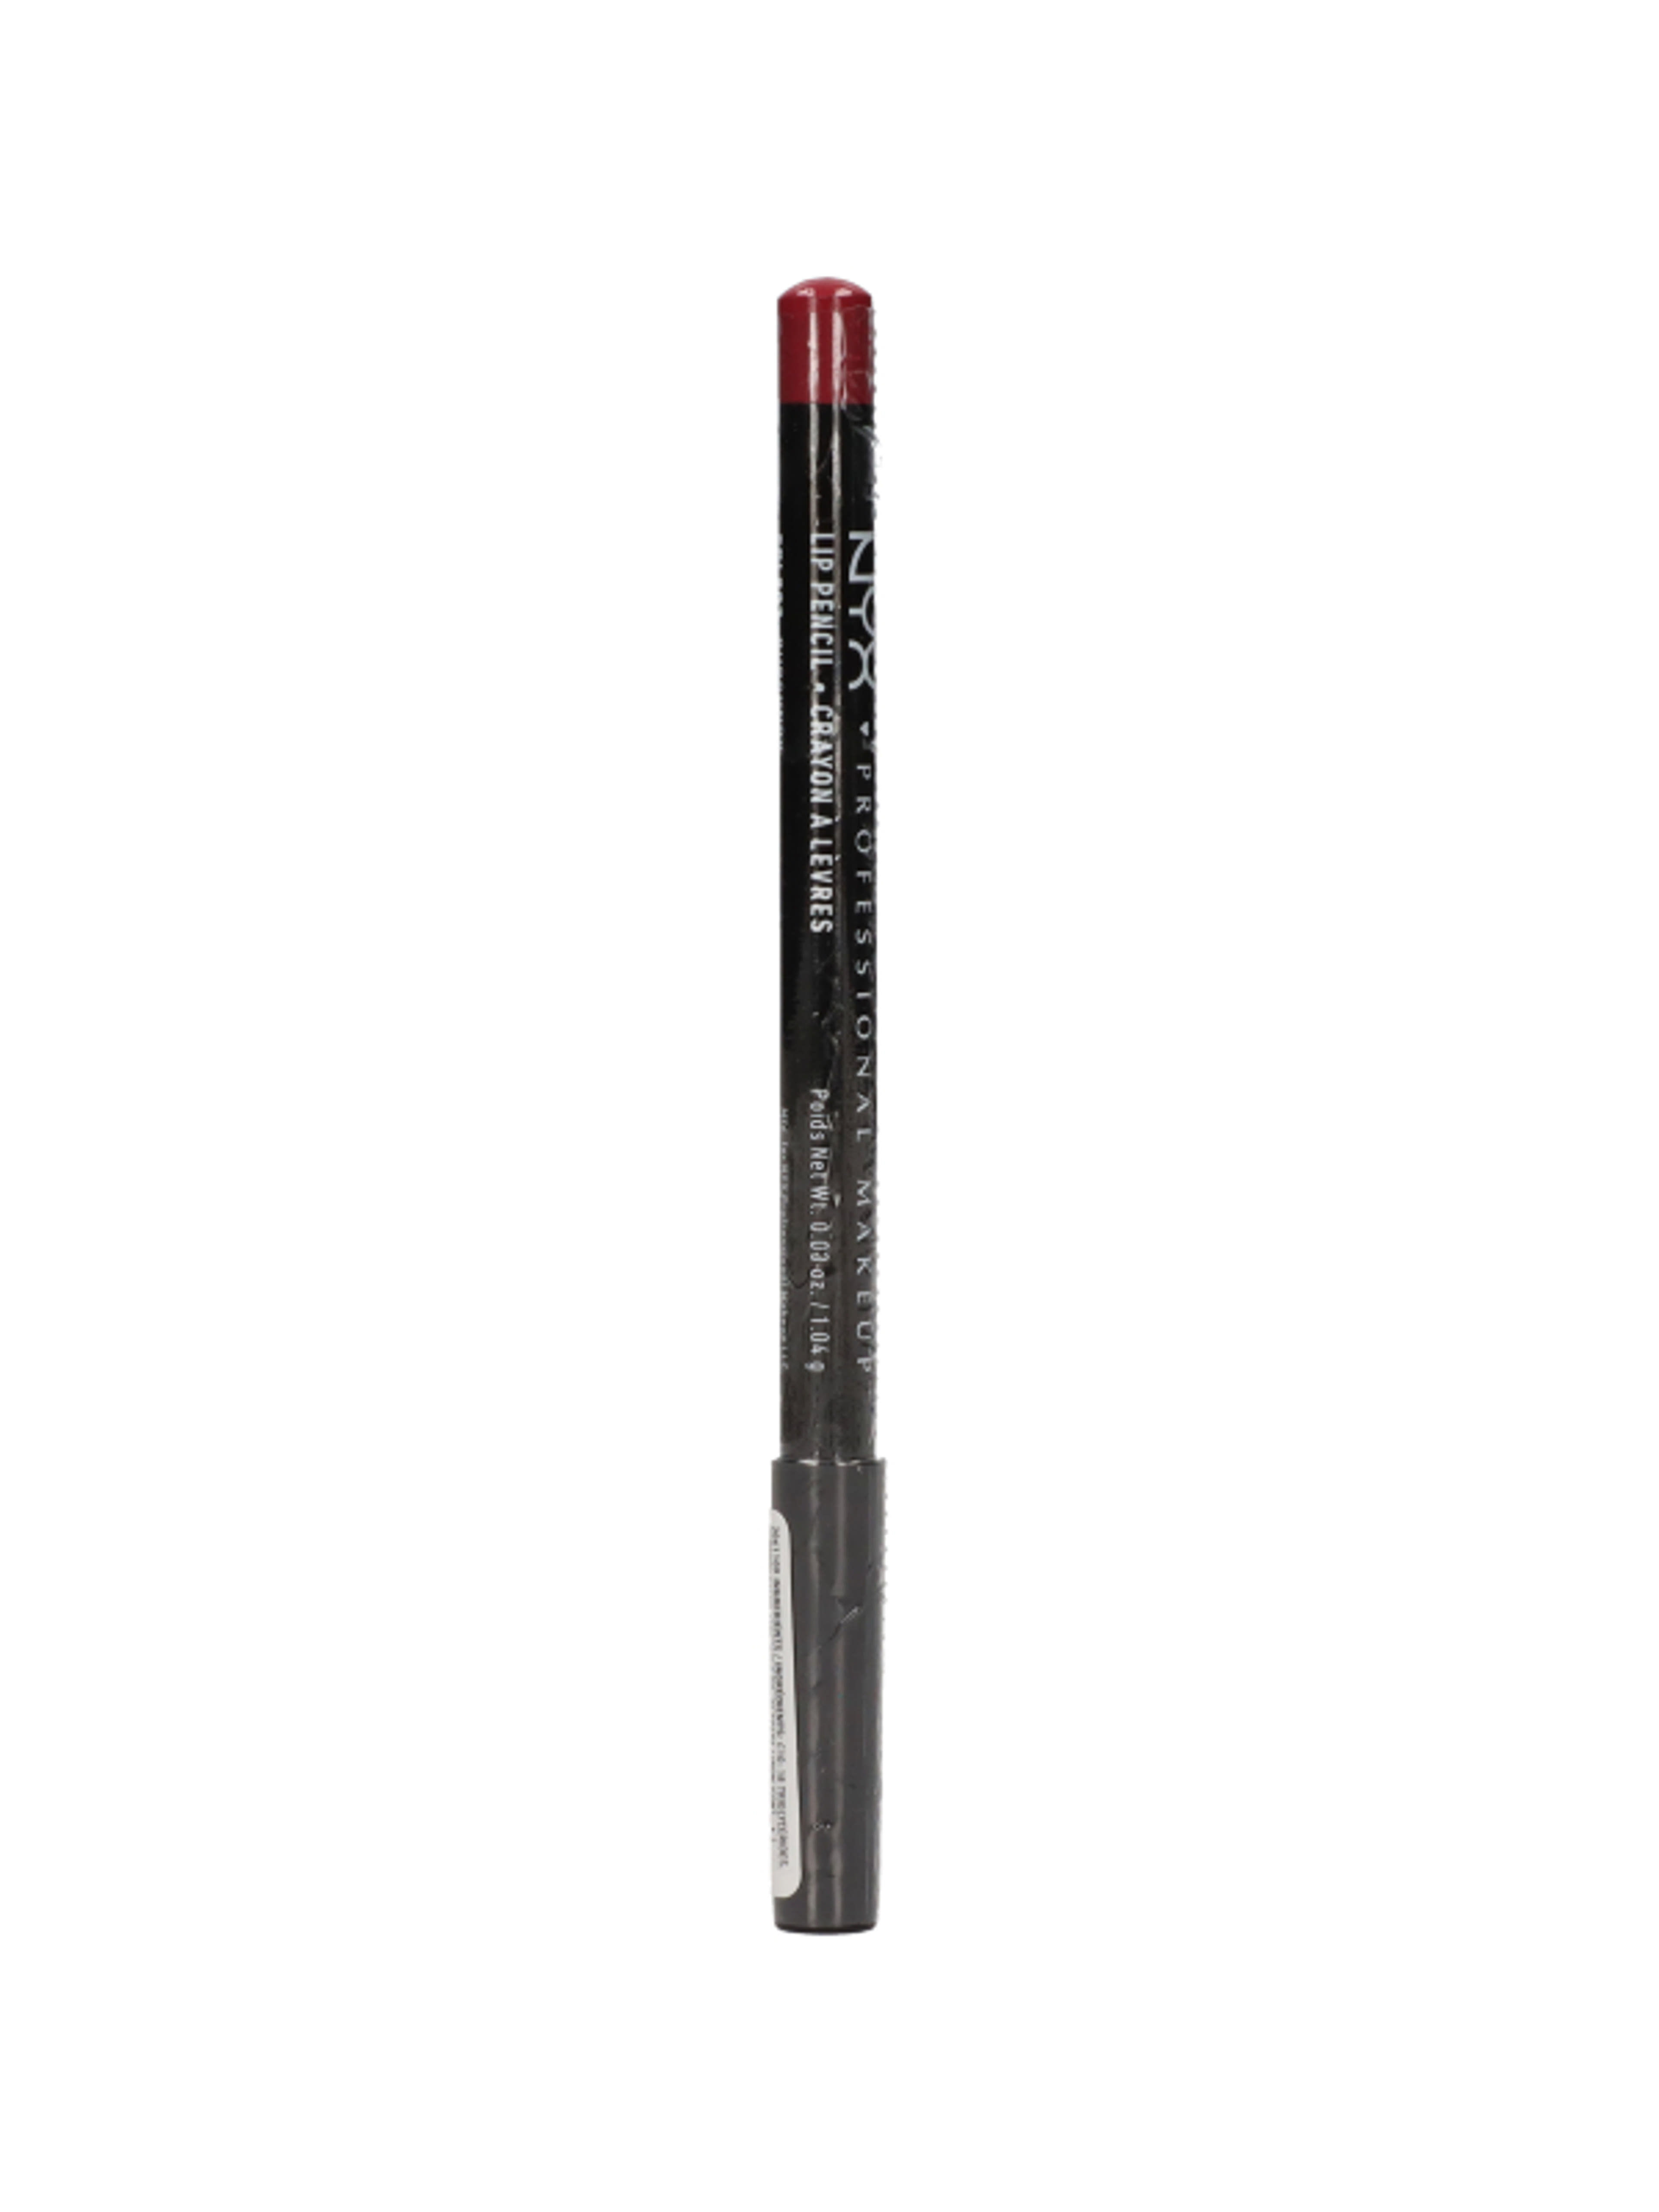 NYX Professional Makeup Slim Lip Pencil ajakkontúr ceruza, Burgundy - 1 db-6